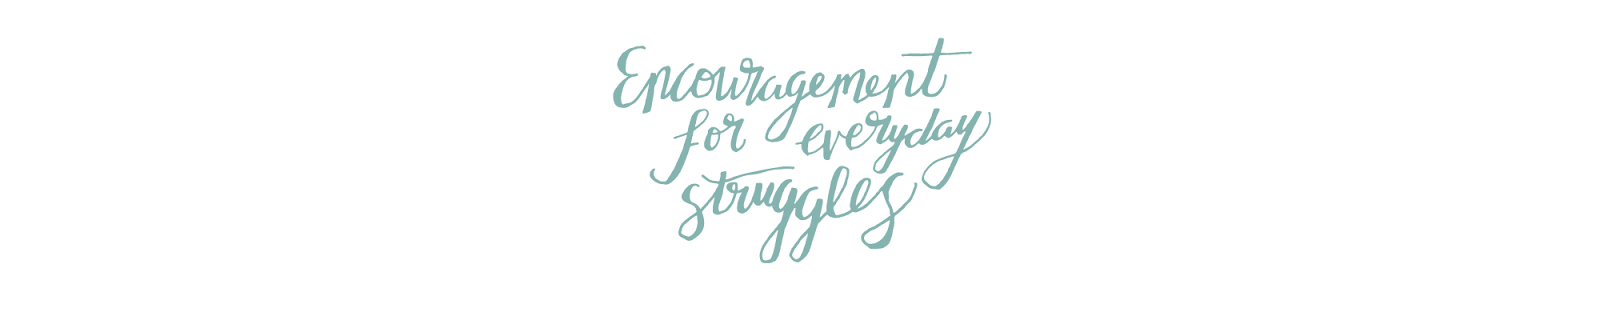 Encouragement For Everyday Struggles